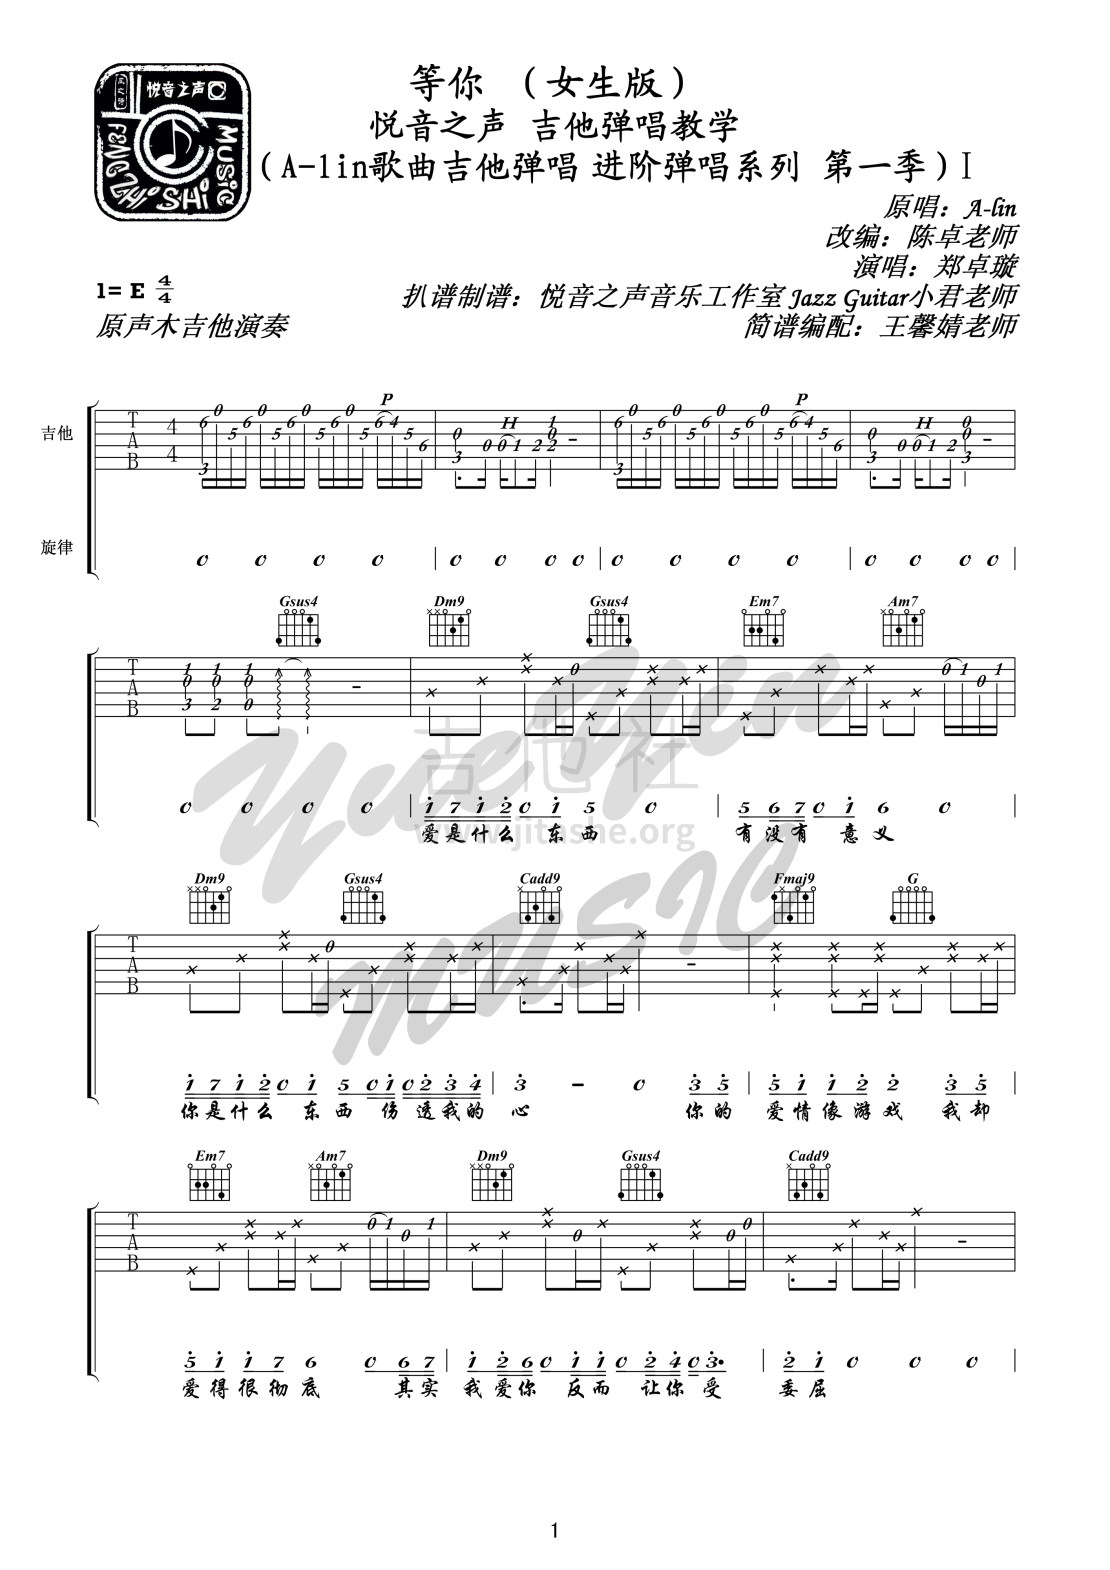 countonme吉他谱简单,ntonme吉他,ntonme吉他原版(第10页)_大山谷图库